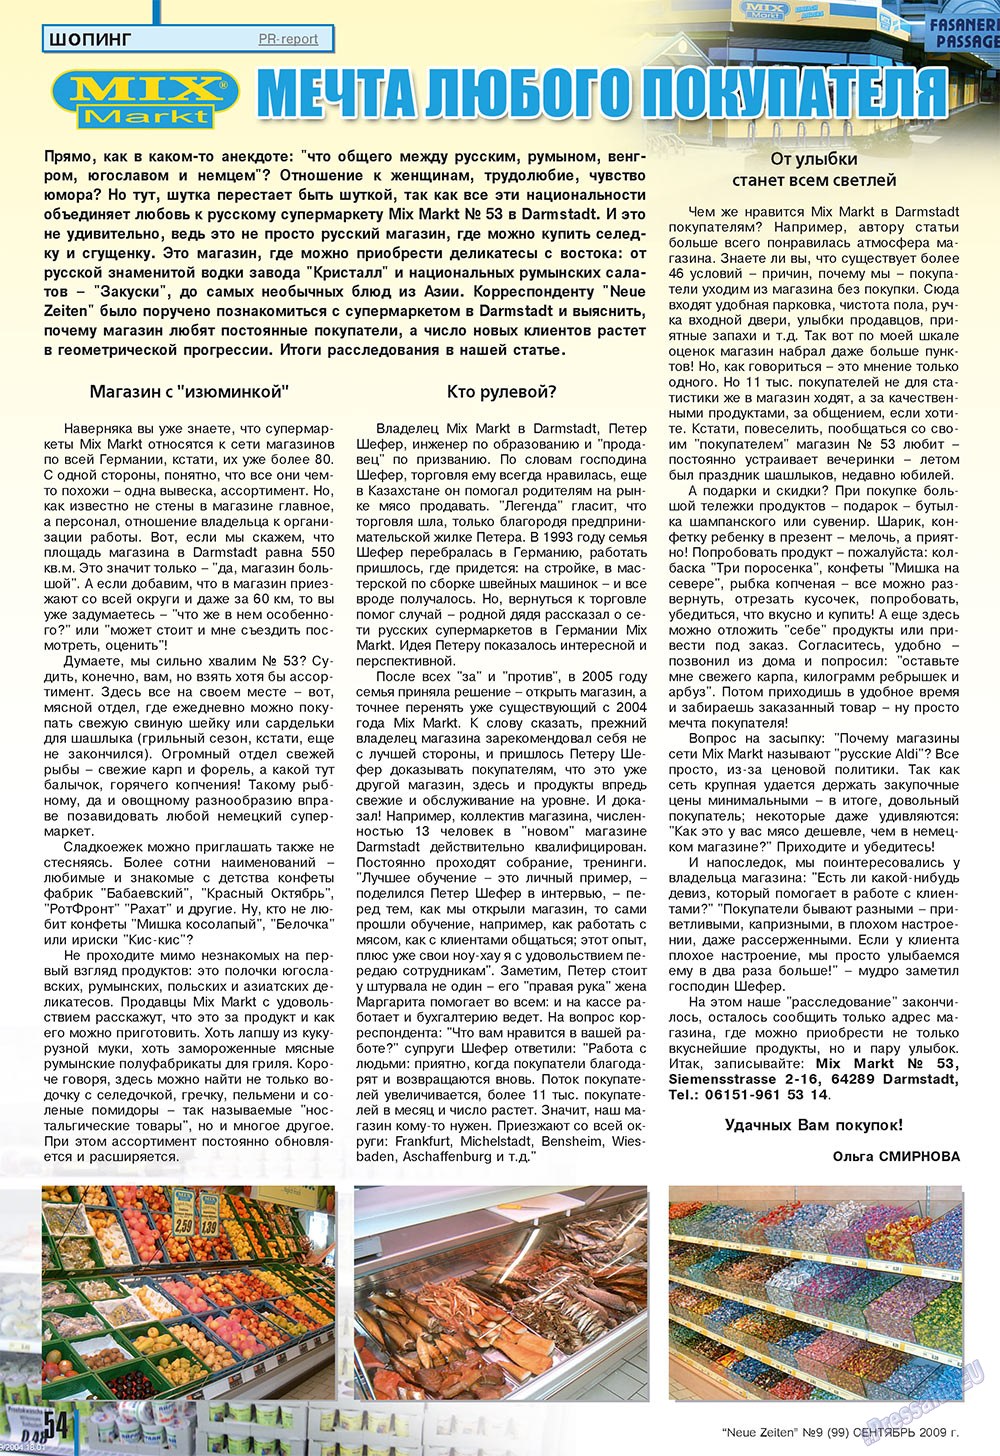 Neue Zeiten (журнал). 2009 год, номер 9, стр. 54